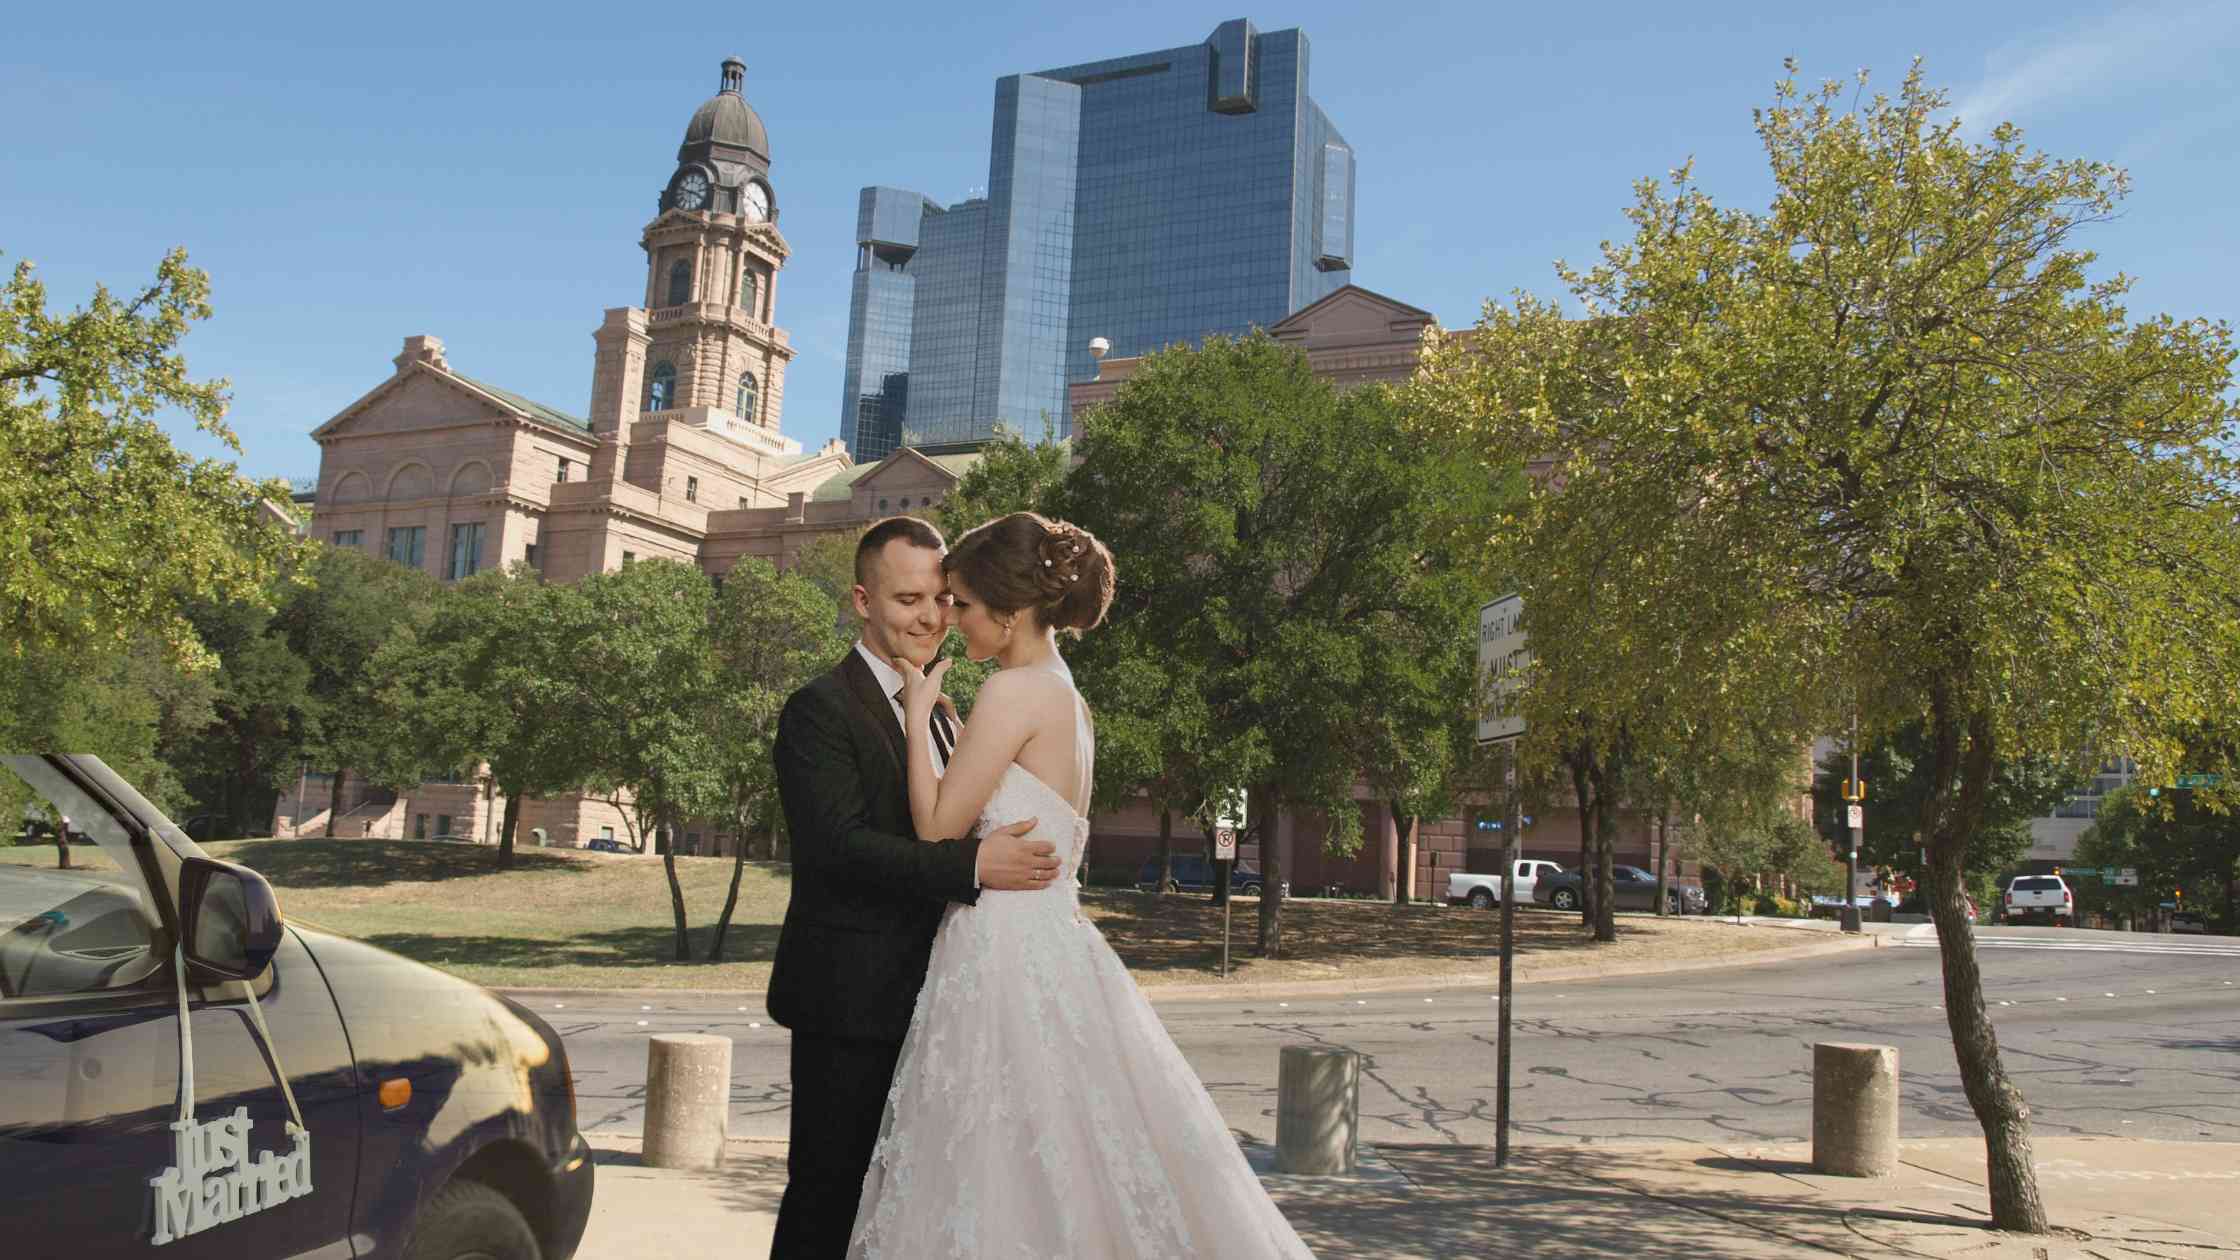 Fort Worth Wedding Planning, Fort Worth Wedding Photographers, Your Complete Wedding Planning Resource